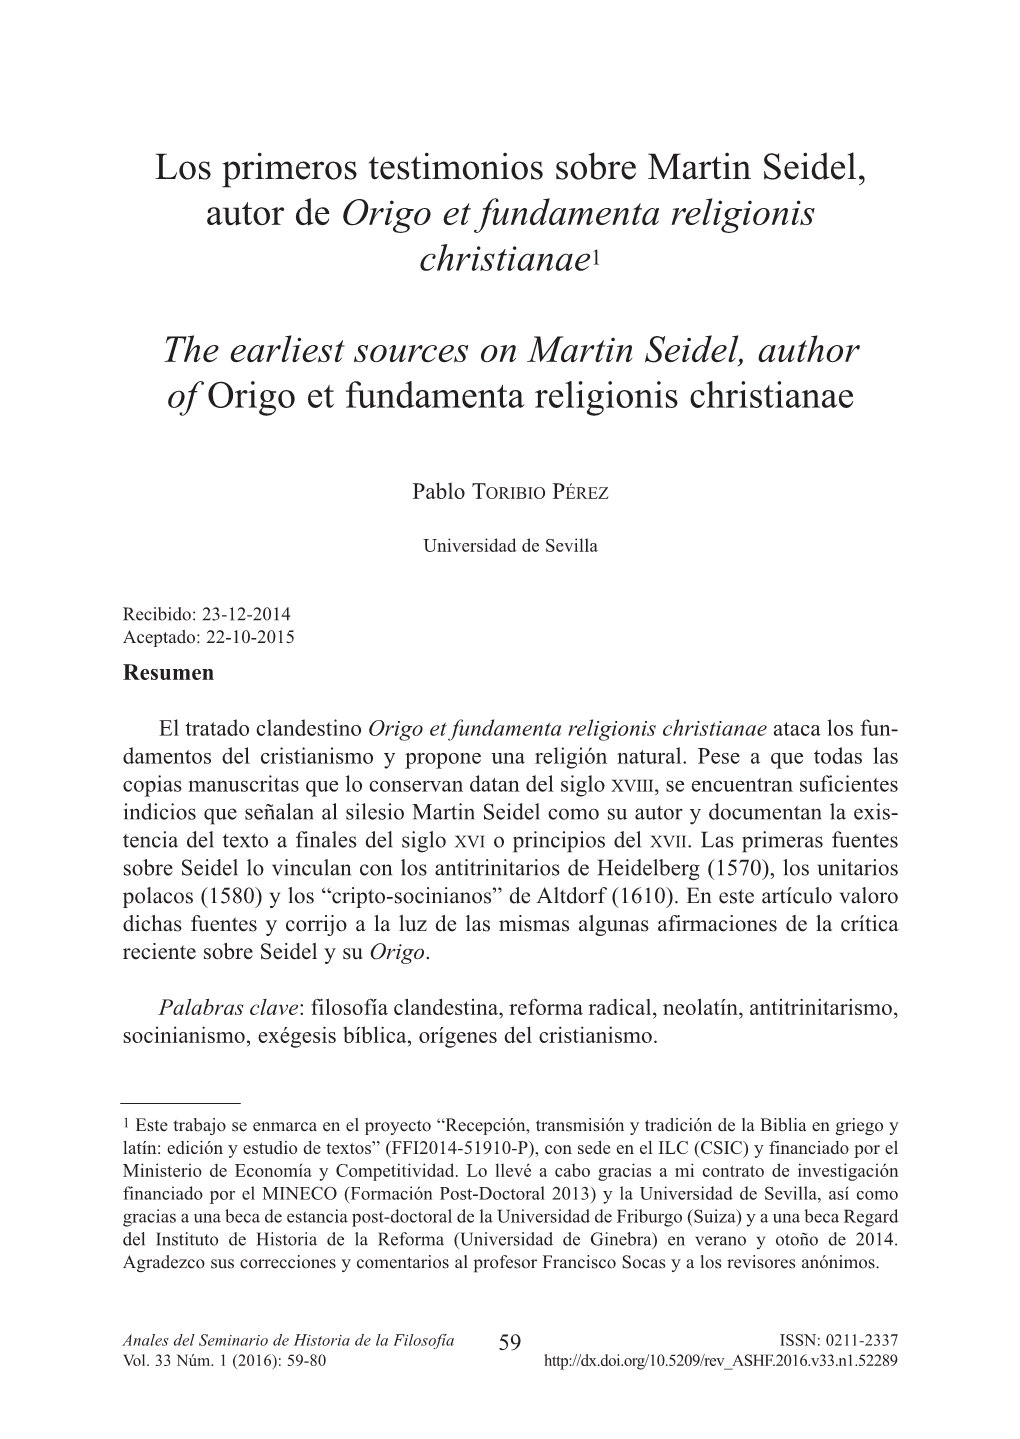 Los Primeros Testimonios Sobre Martin Seidel, Autor De Origo Et Fundamenta Religionis Christianae1 the Earliest Sources on Marti